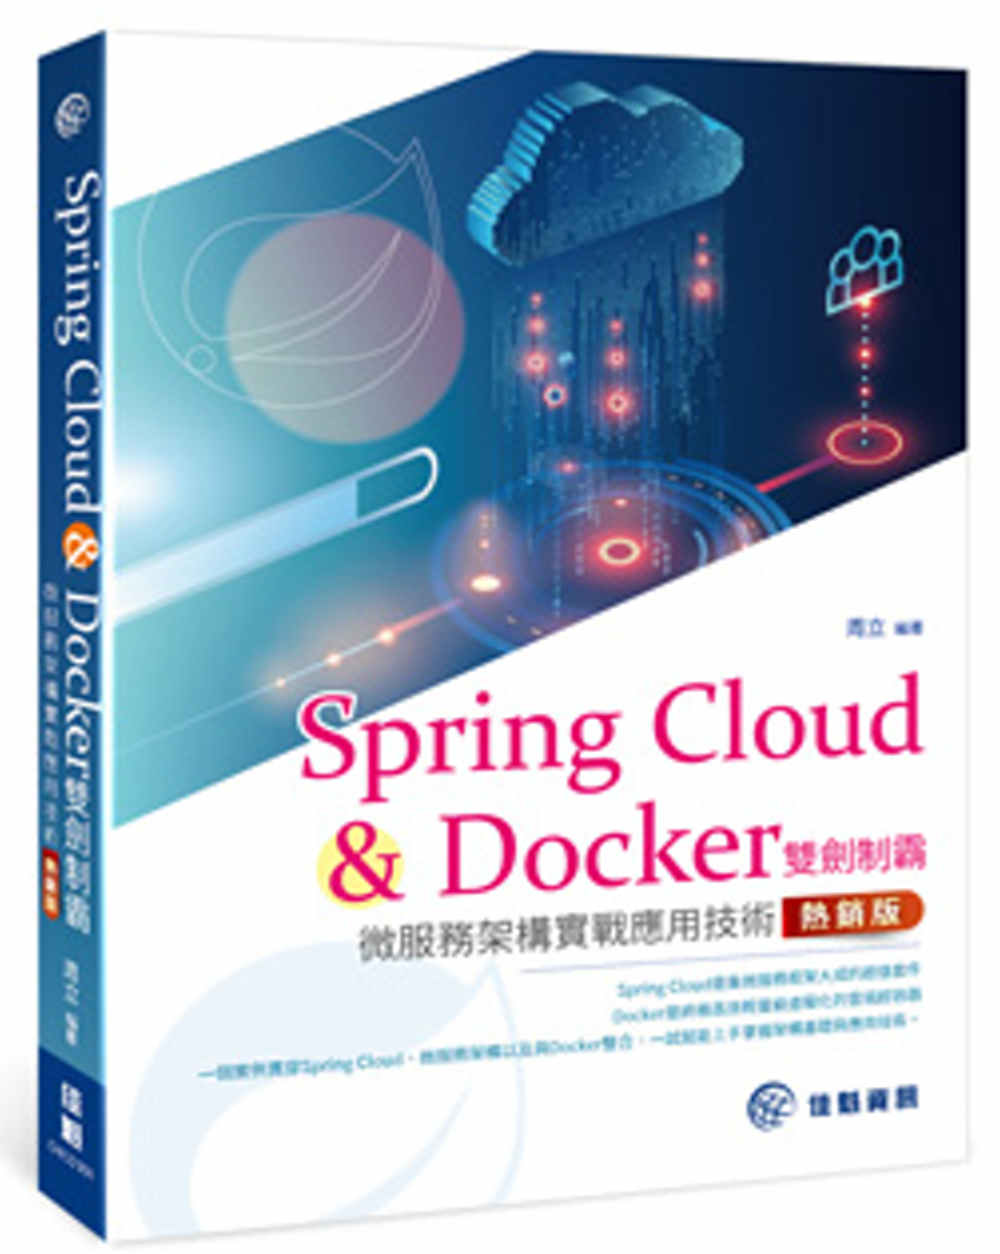 Spring Cloud & Docker雙劍制霸-微服務架...